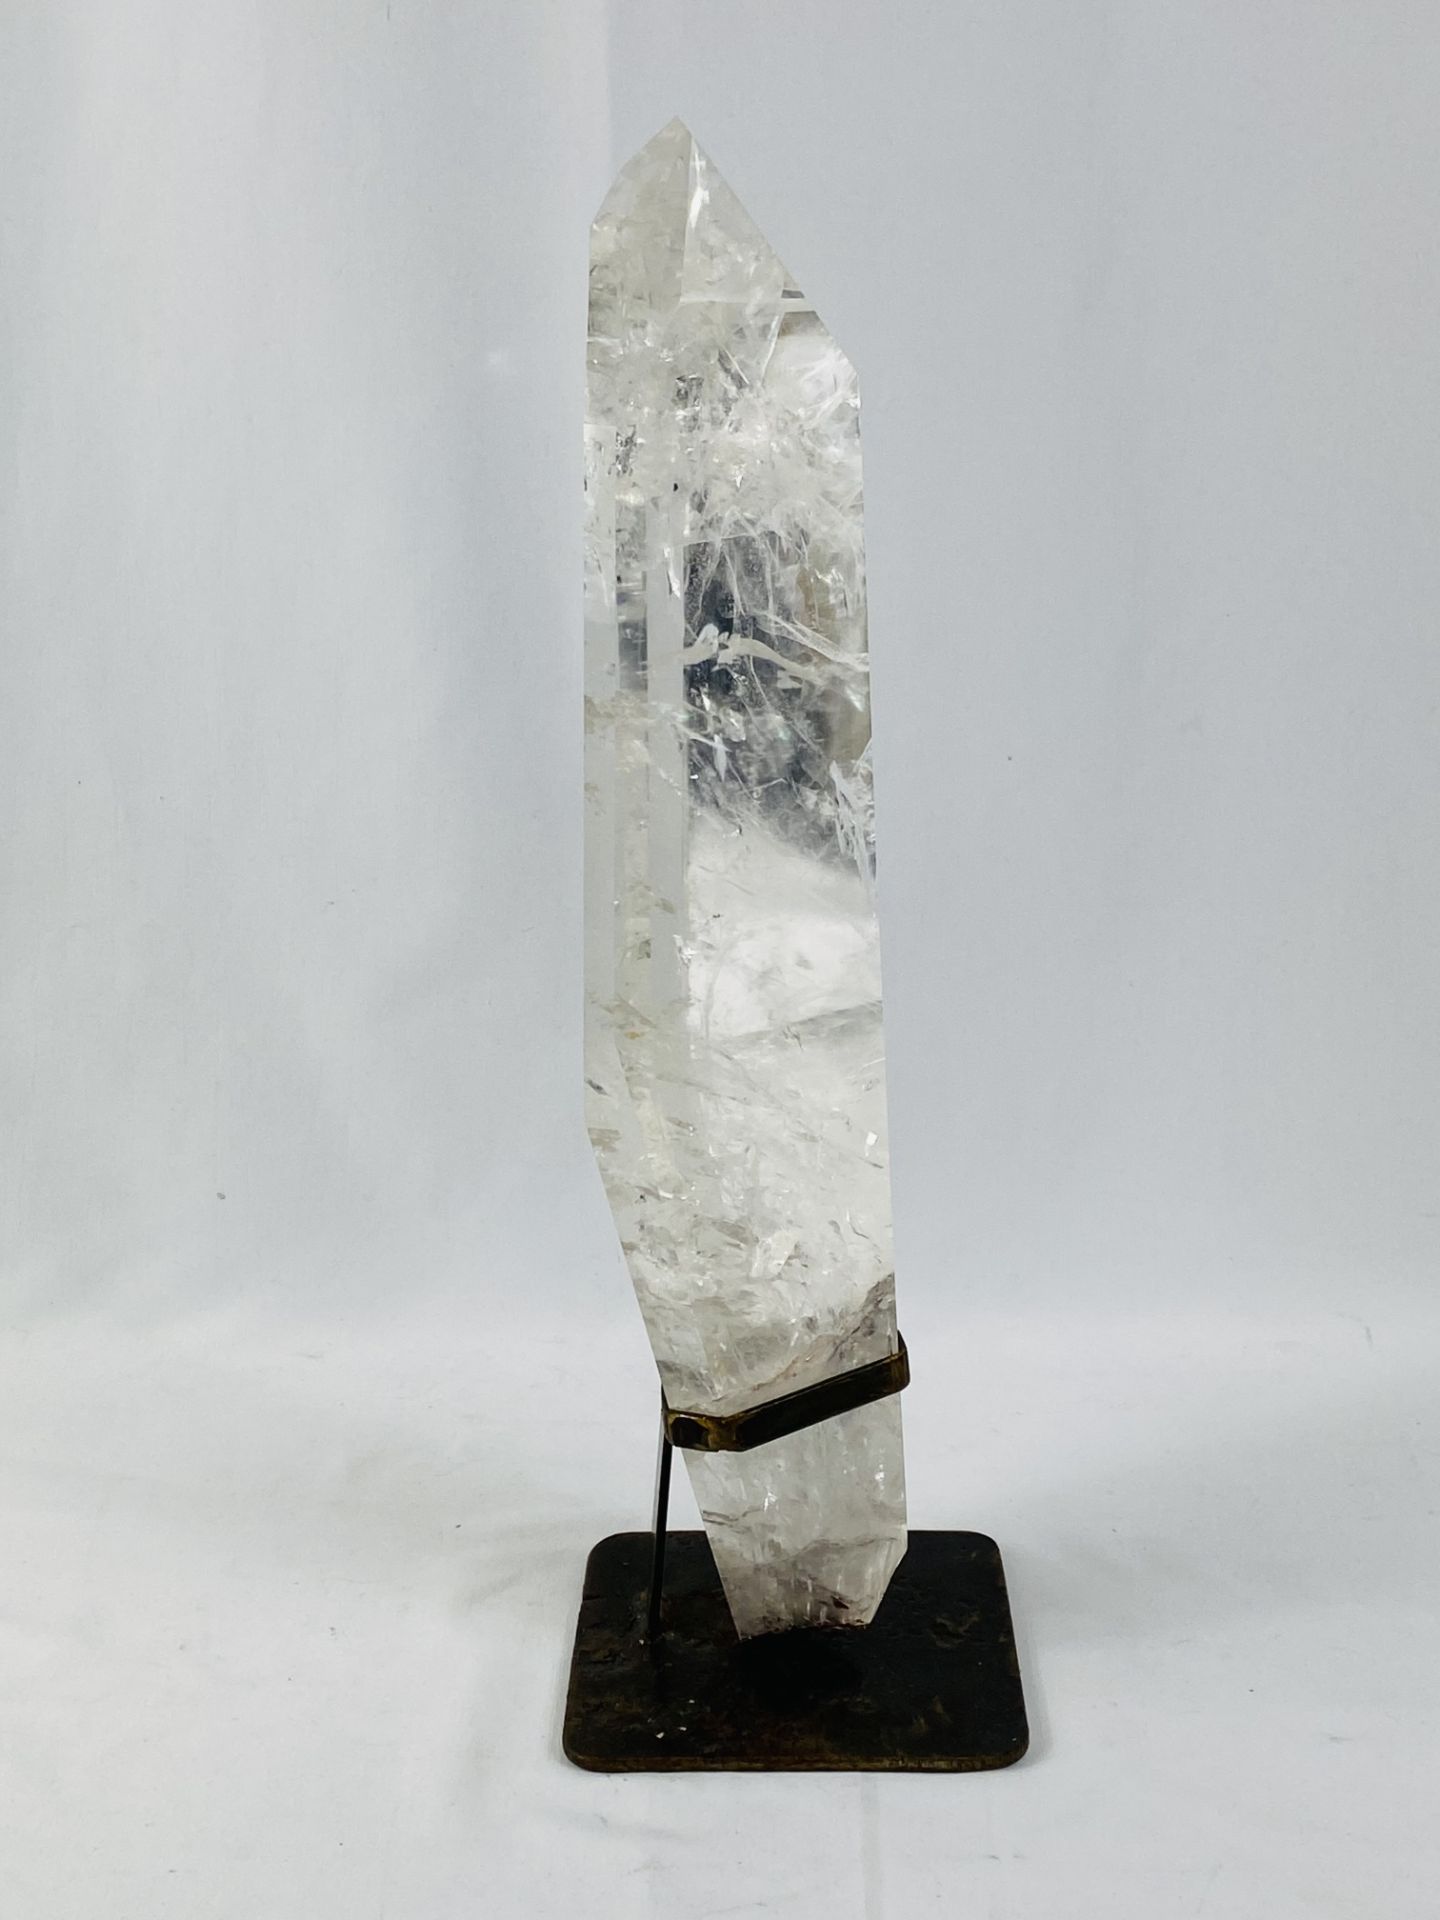 Polished rock crystal mounted in metal base - Image 4 of 6